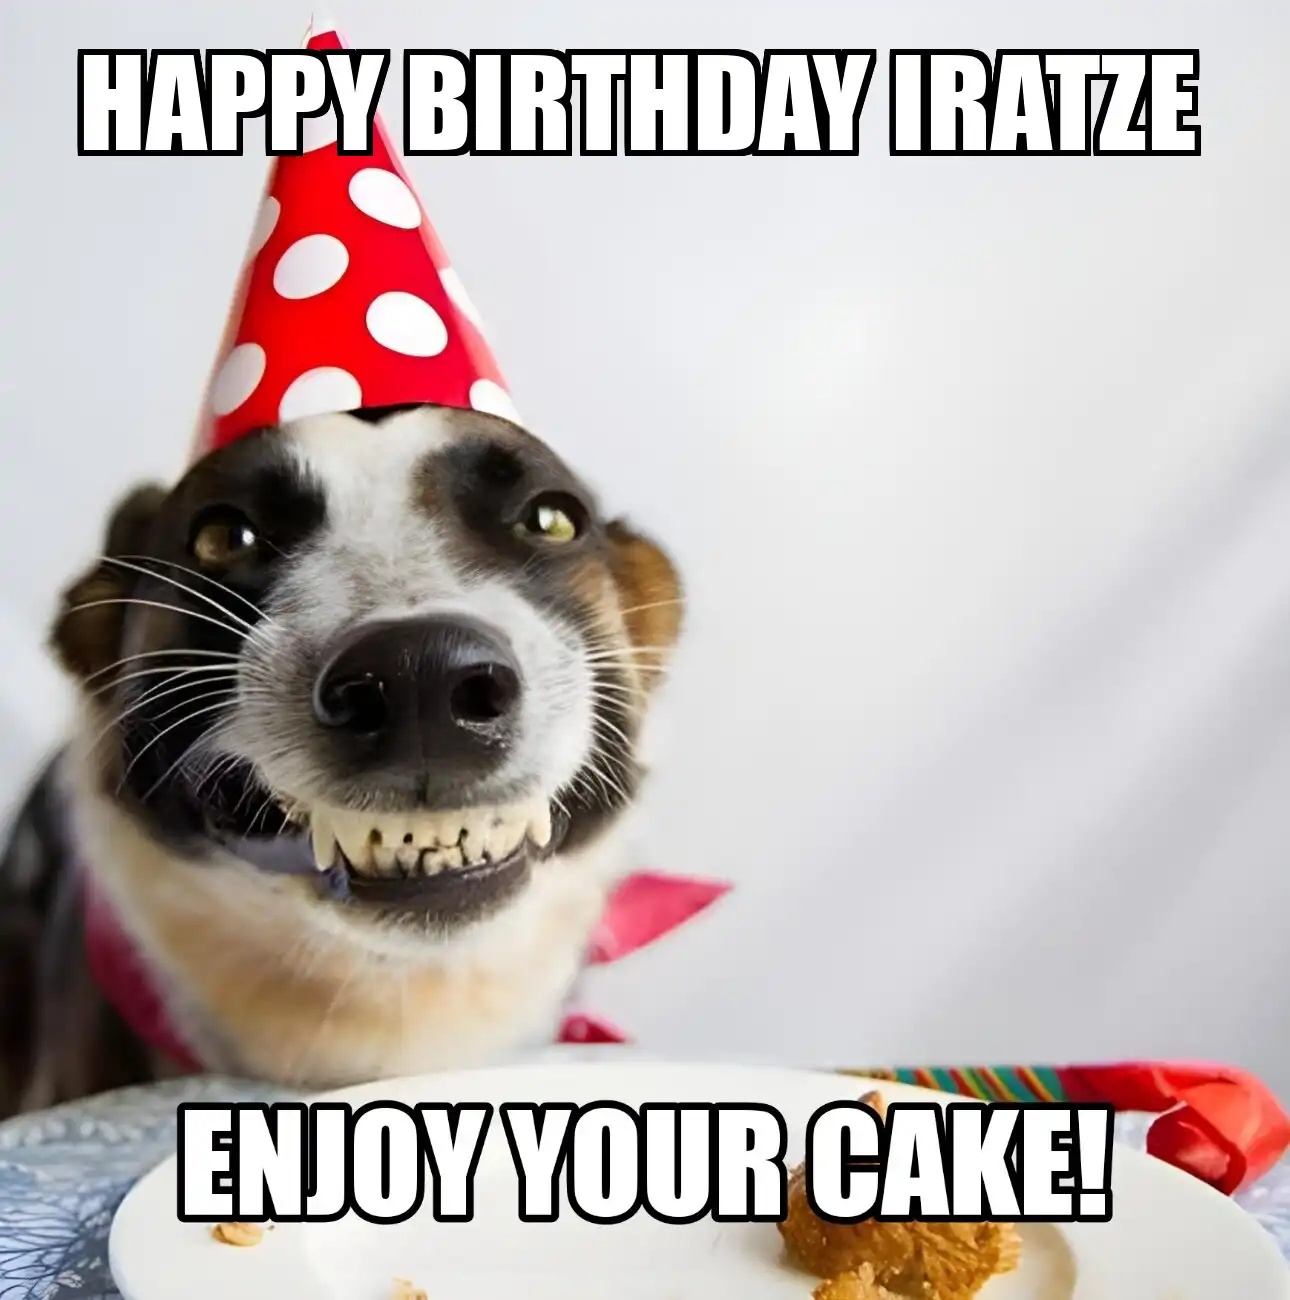 Happy Birthday Iratze Enjoy Your Cake Dog Meme